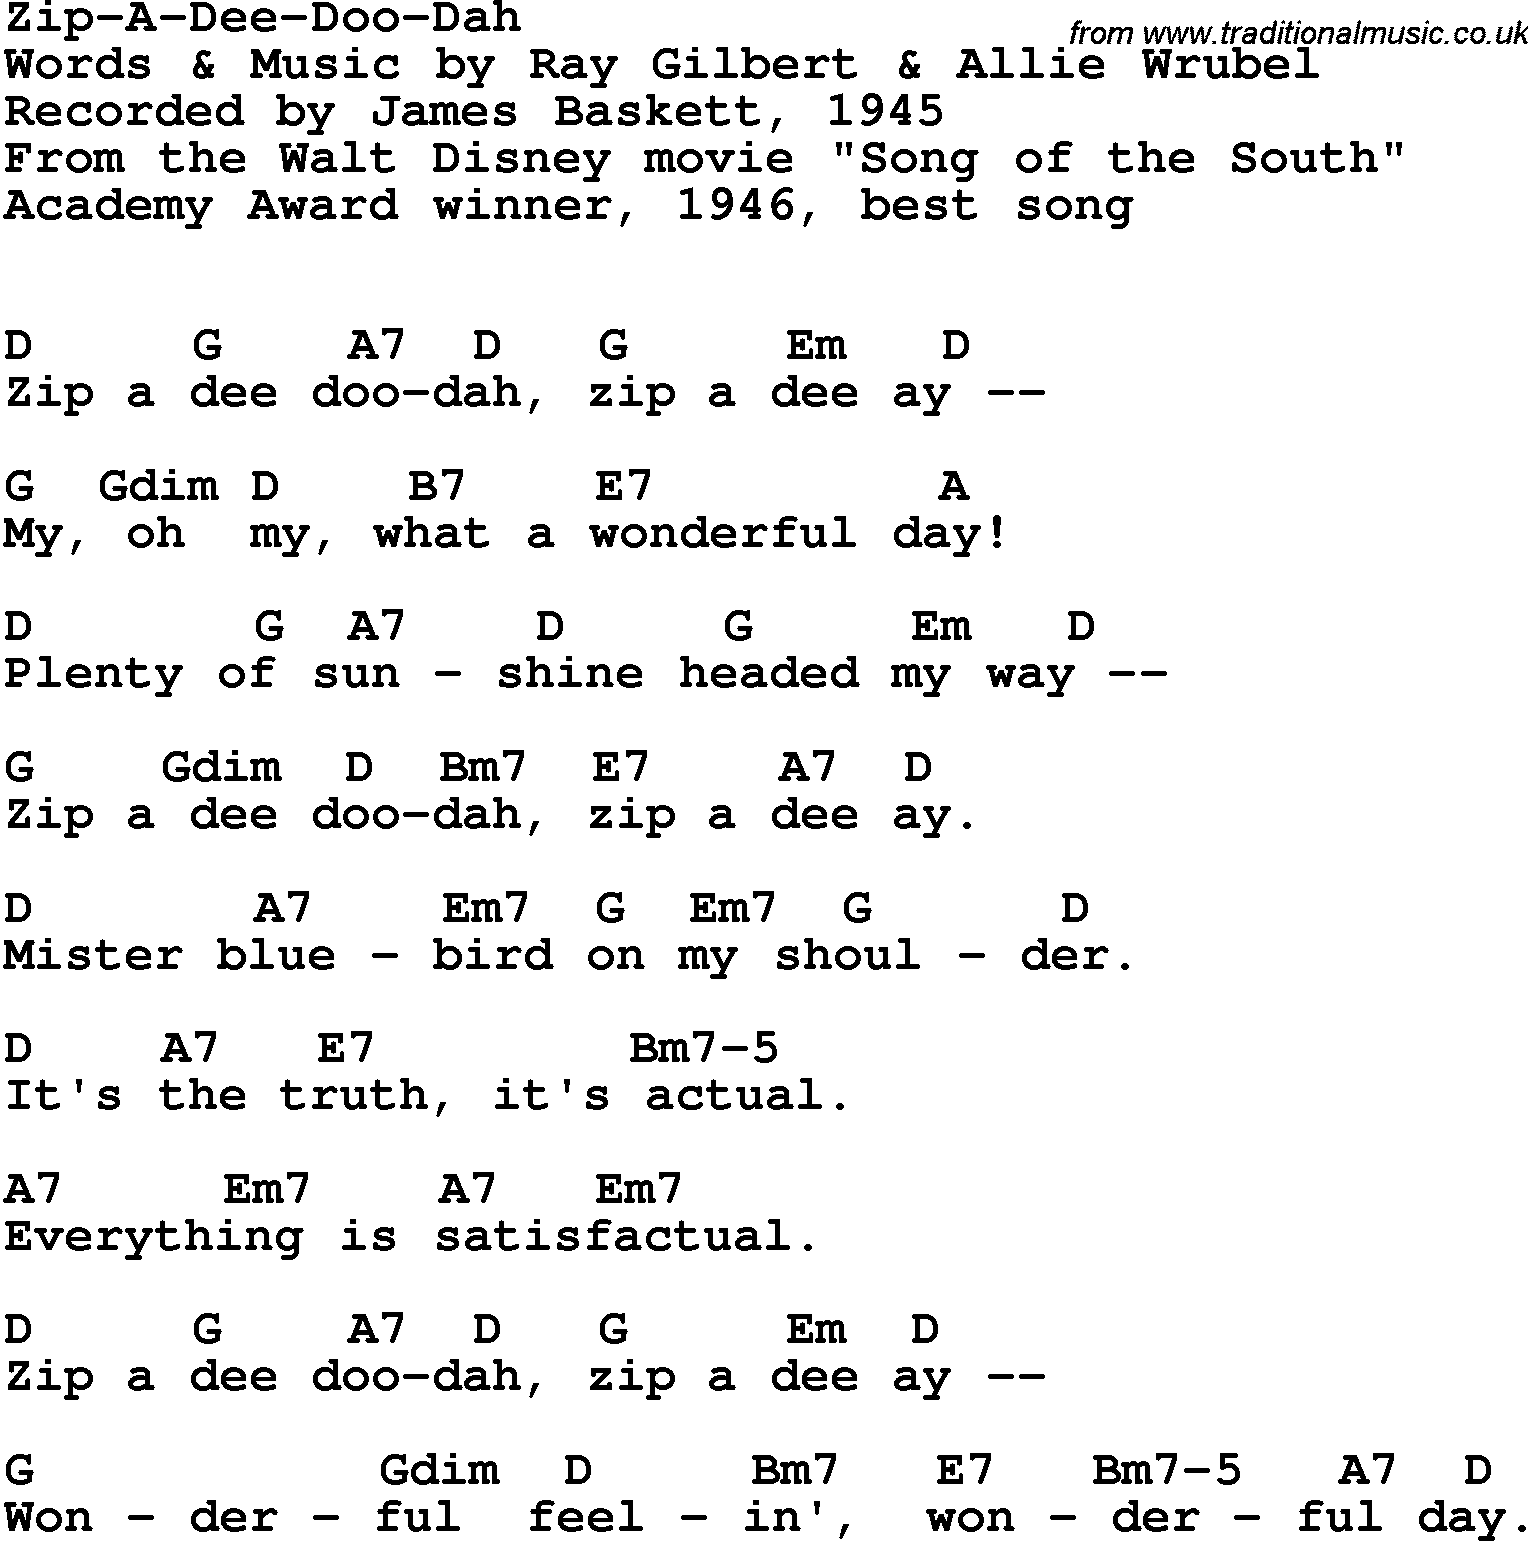 Song Lyrics With Guitar Chords For Zip A Dee Doo Dah James Baskett 1946